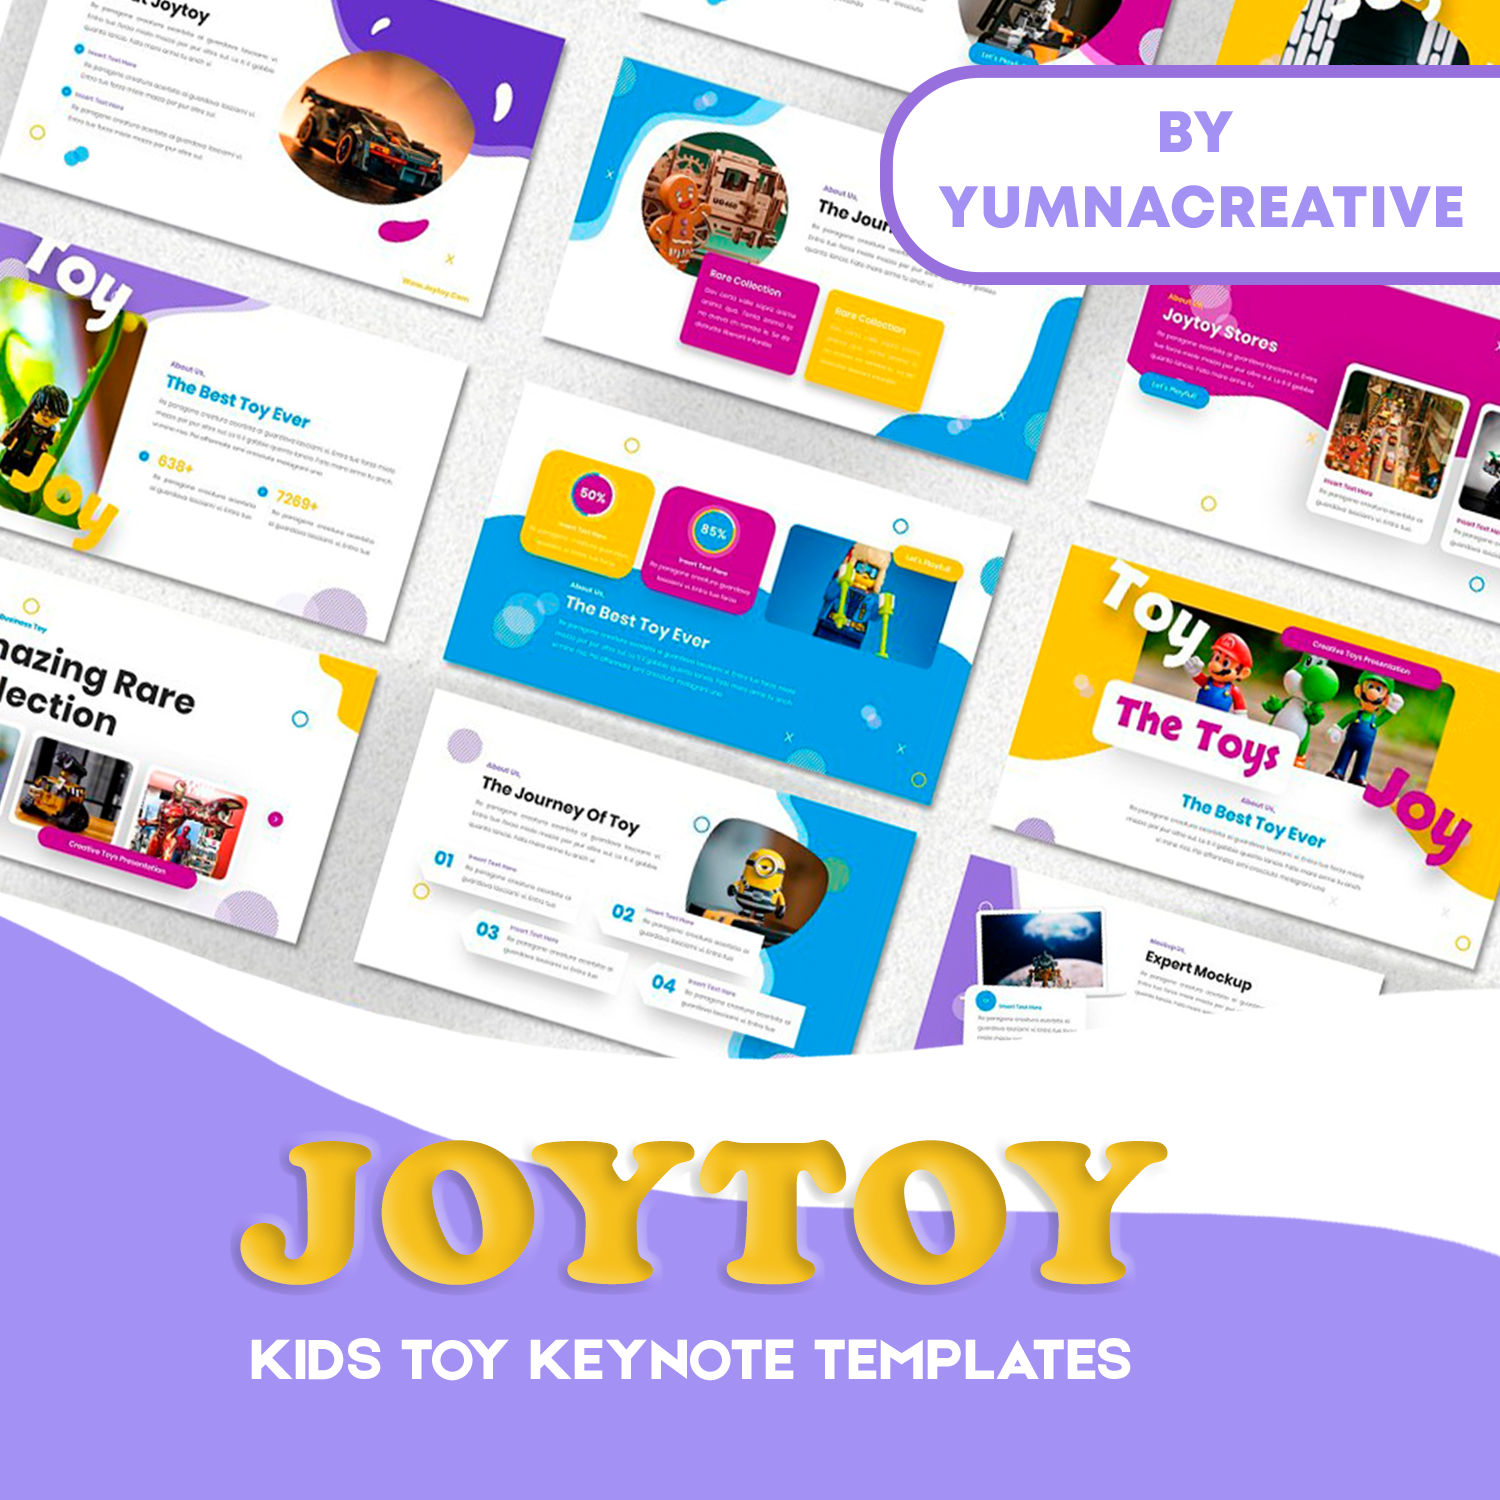 joytoy kids toy keynote templates preview image